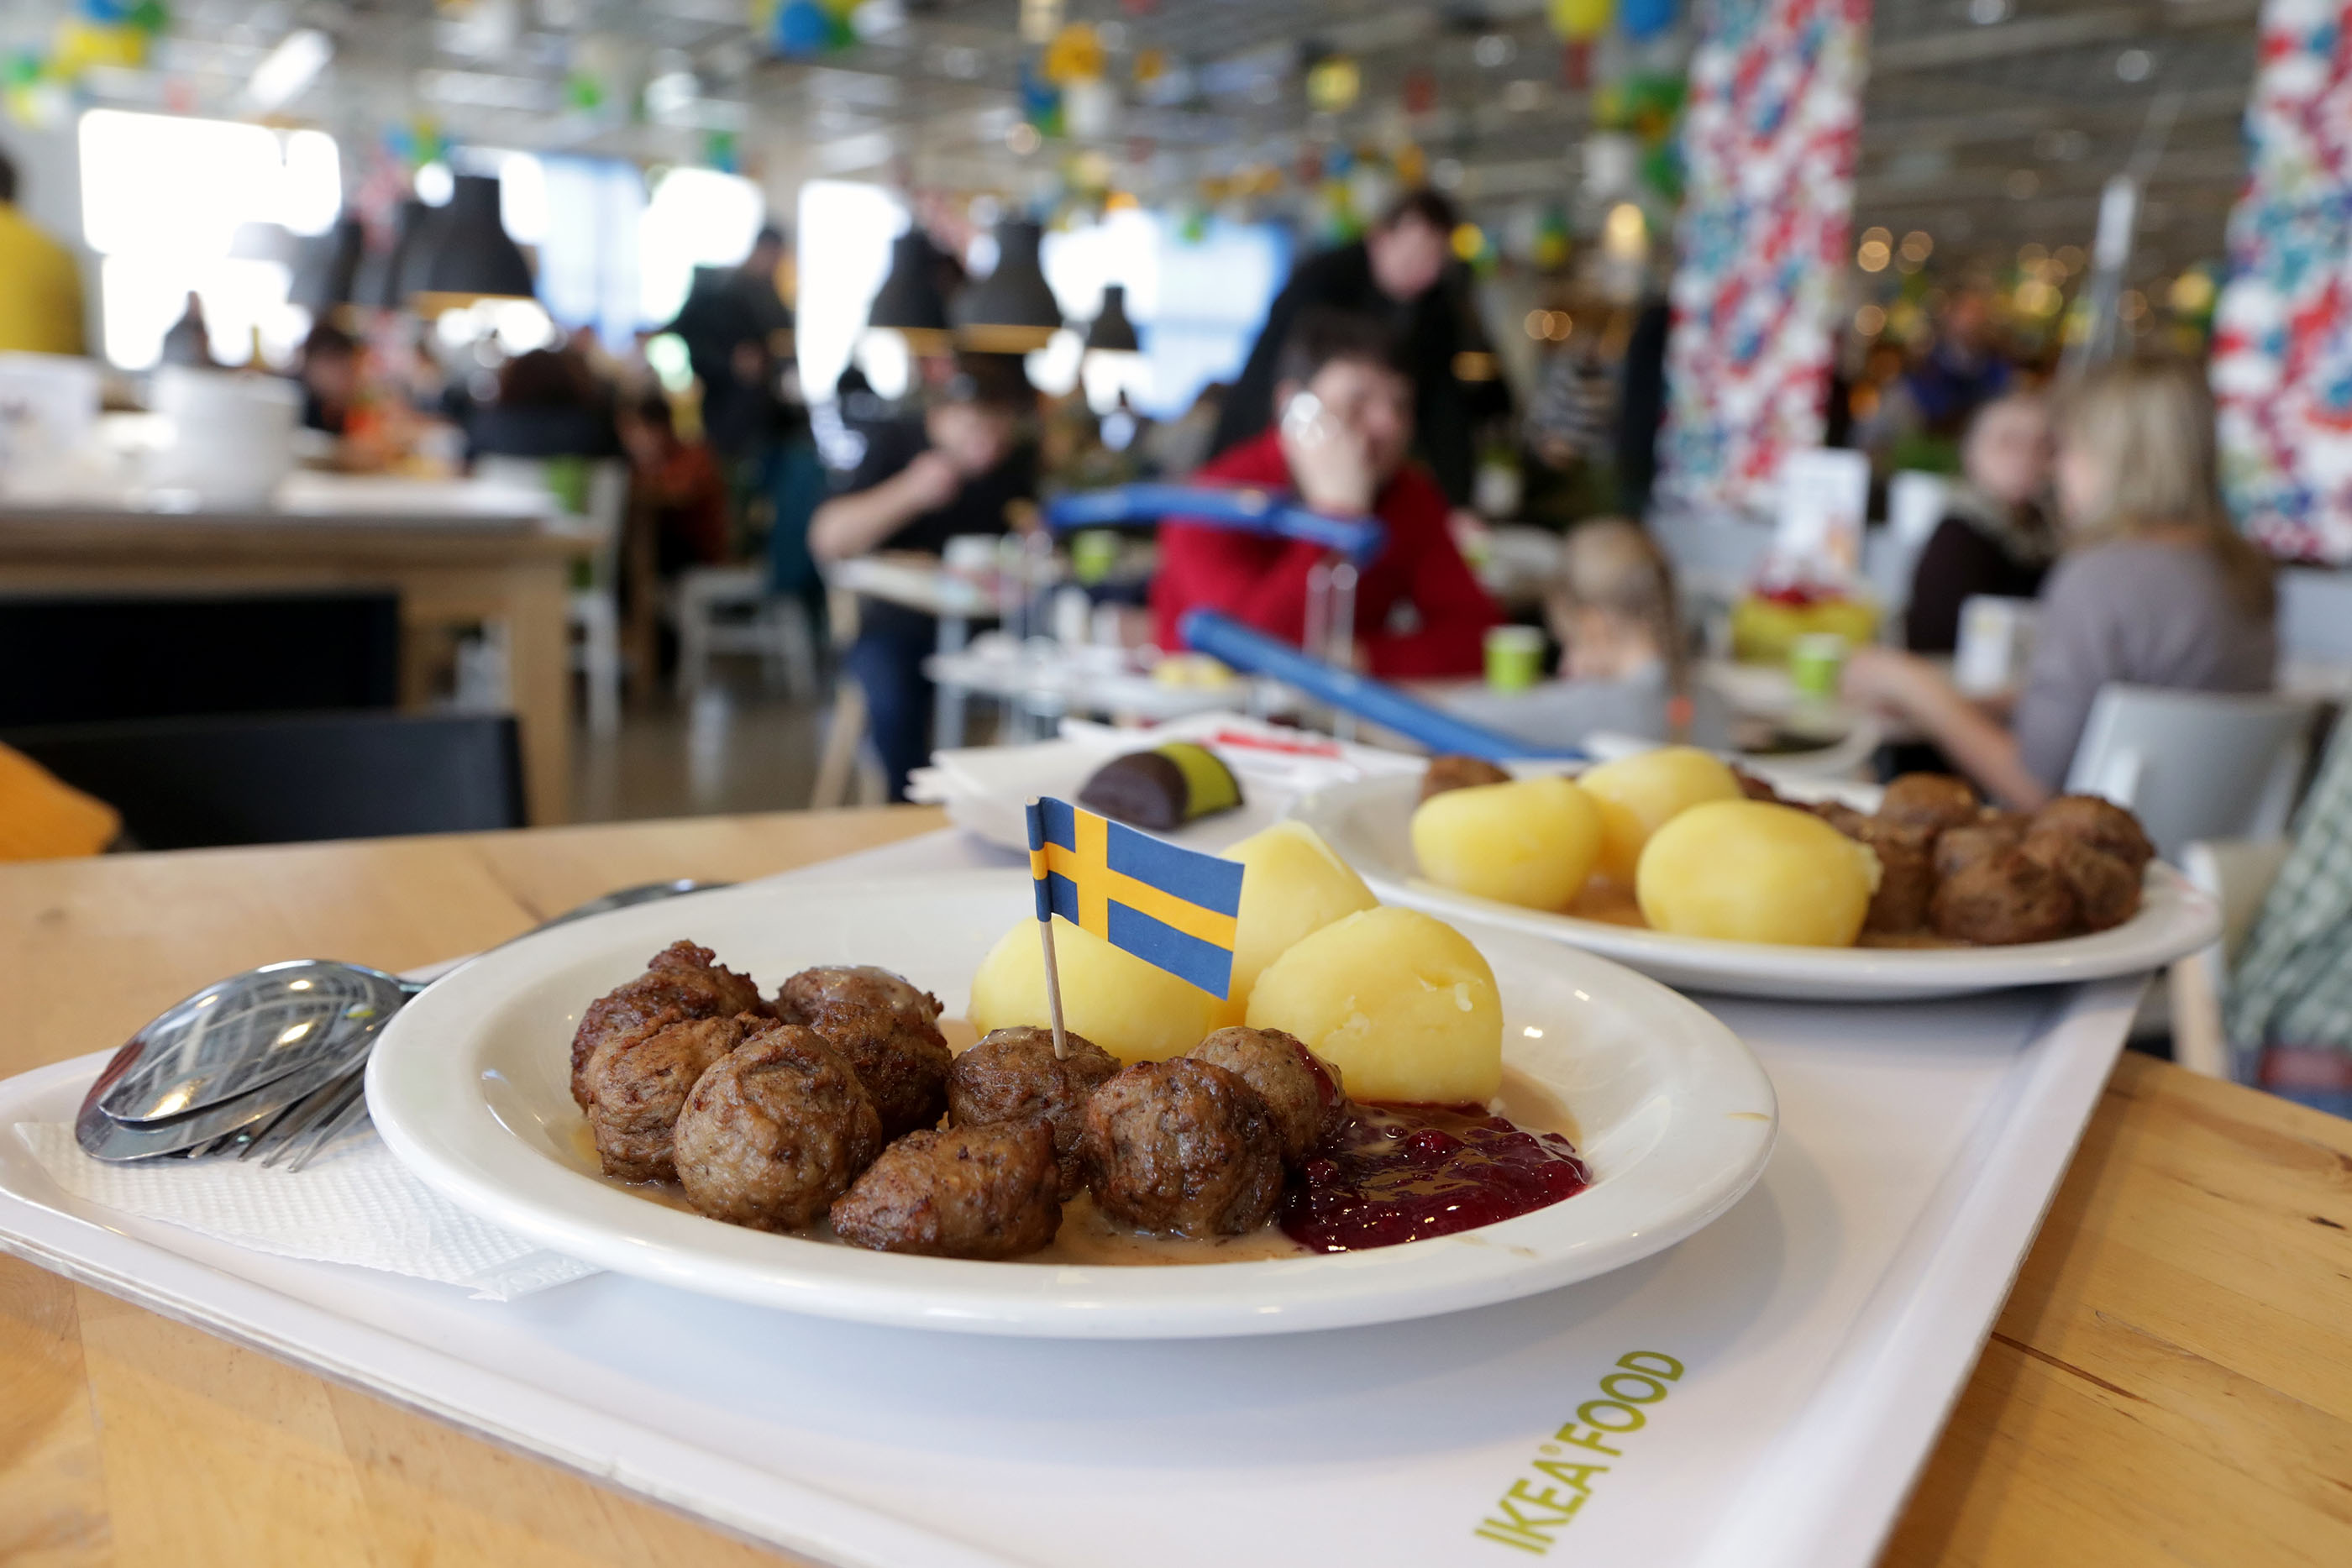 Kwijting Socialisme prijs Ikea: What the Best Deals Are at Its Restaurant | Money